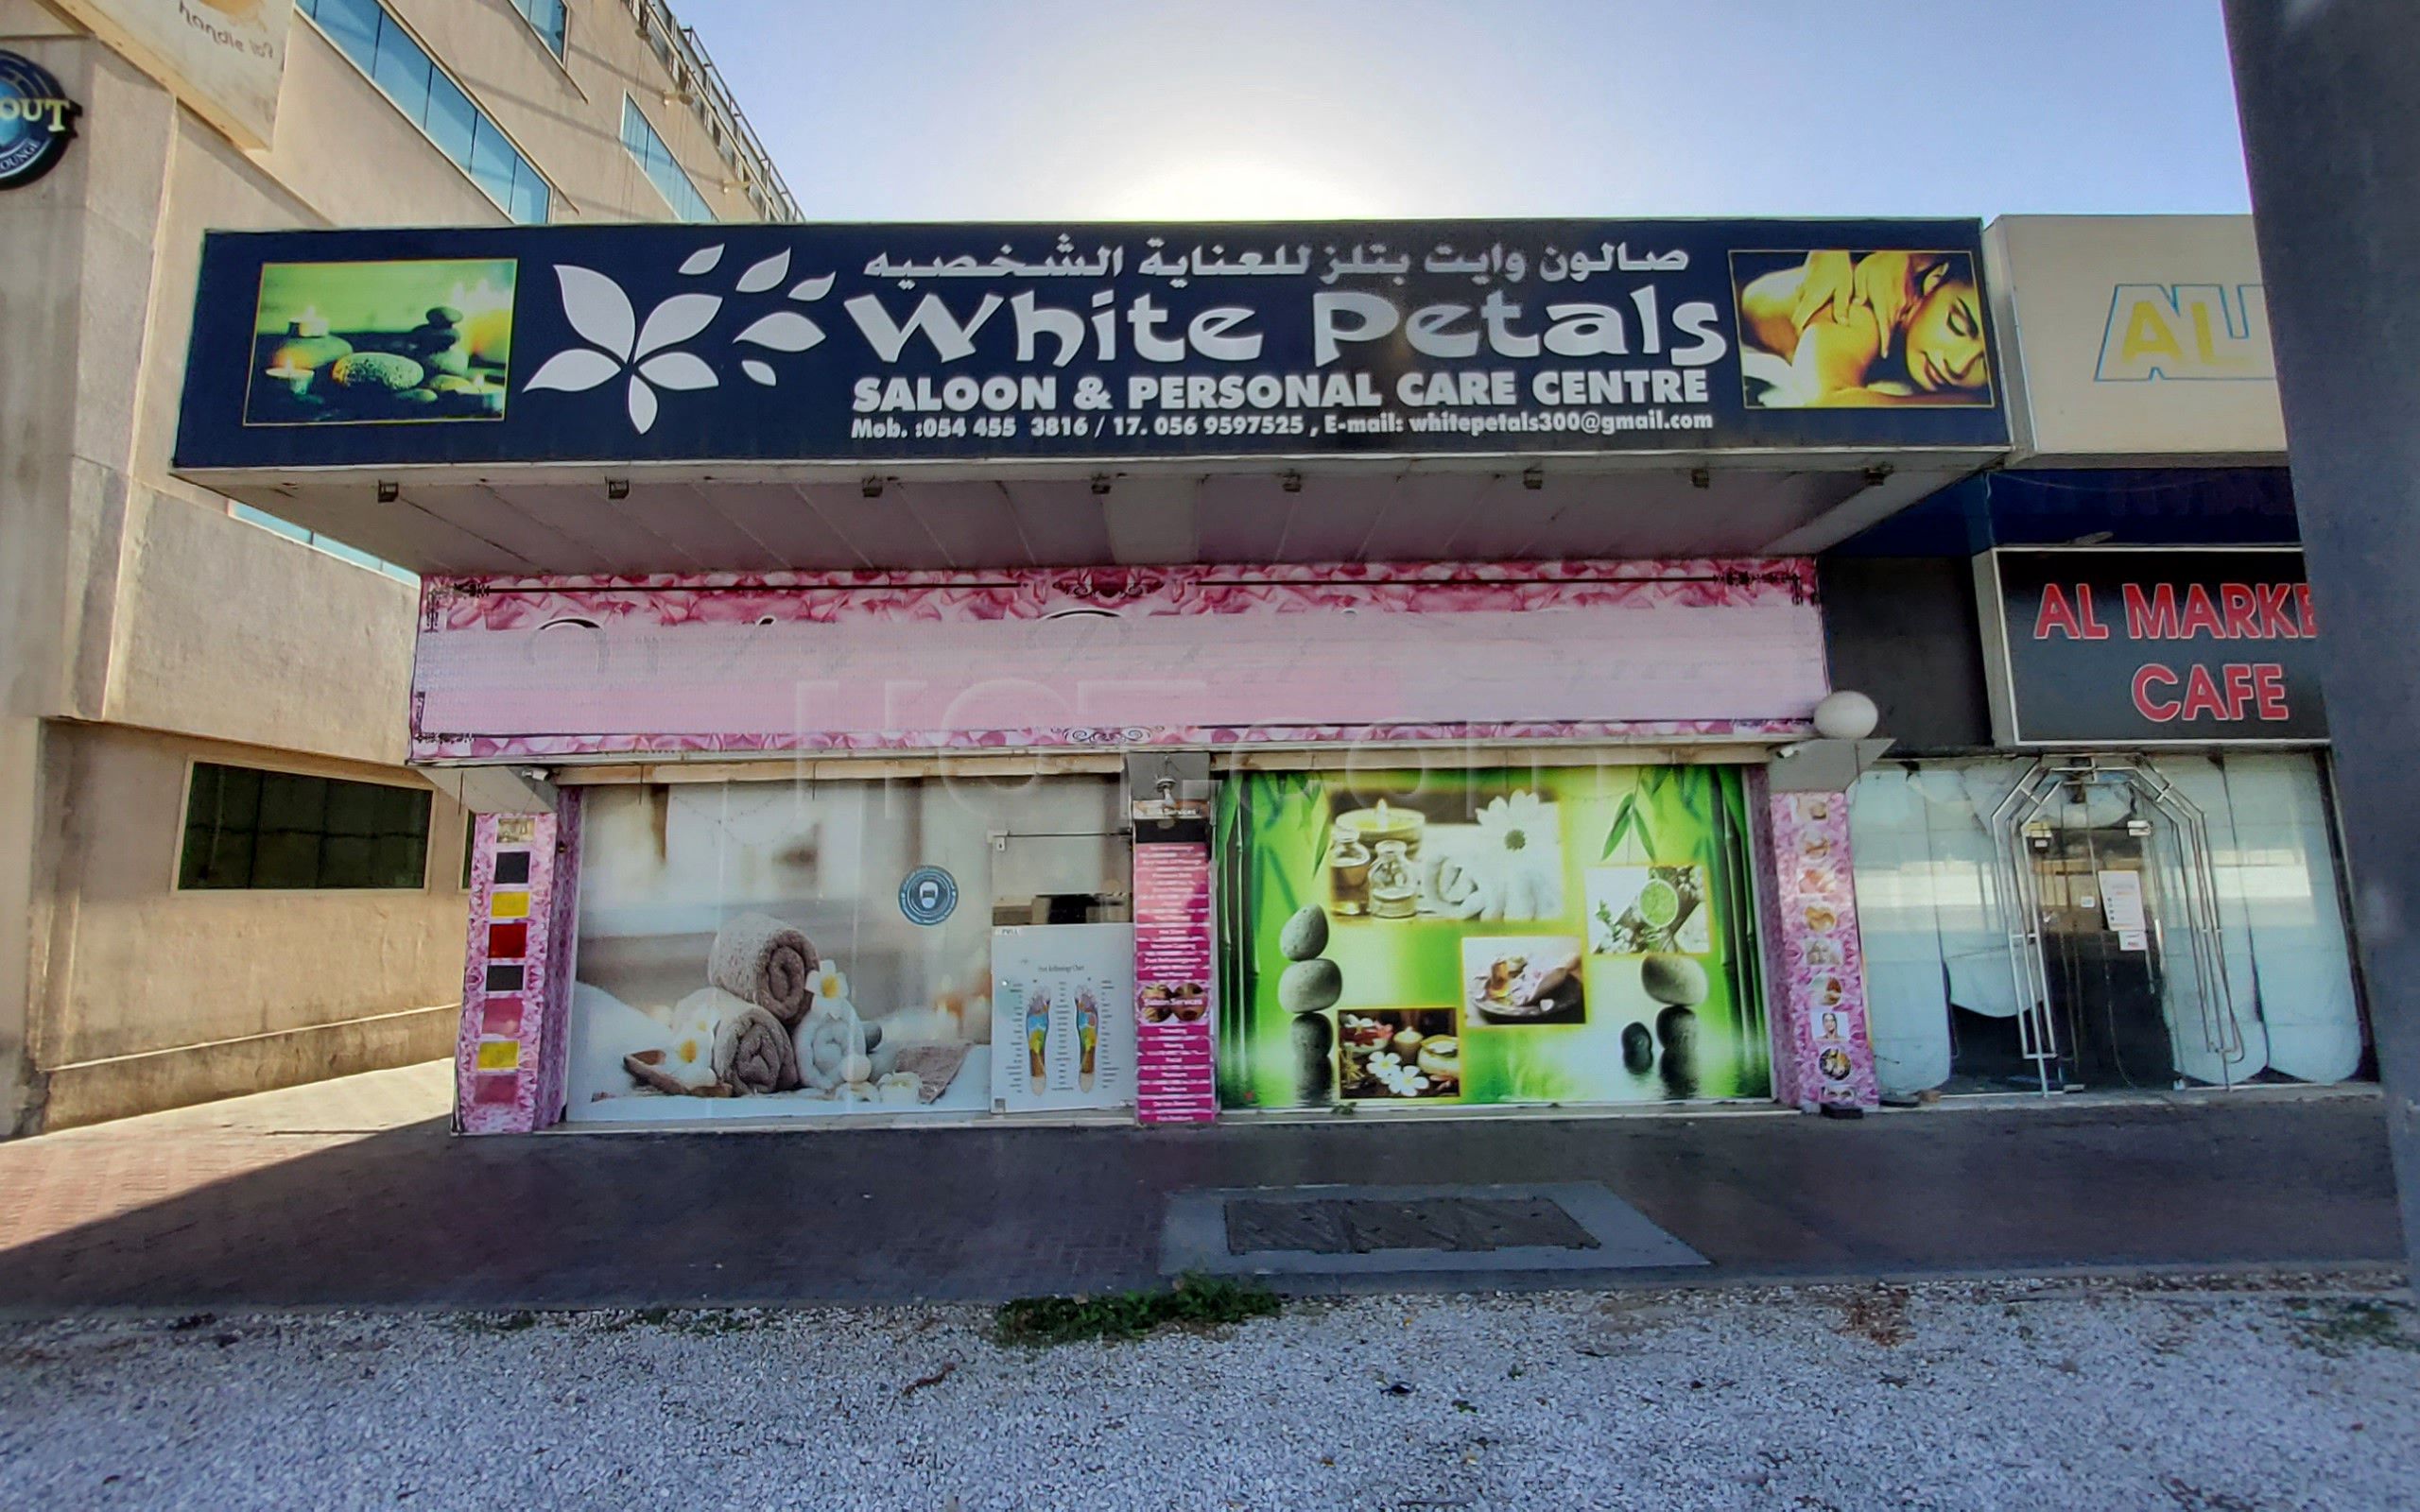 Dubai, United Arab Emirates White Petals Saloon & Personal Care Centre